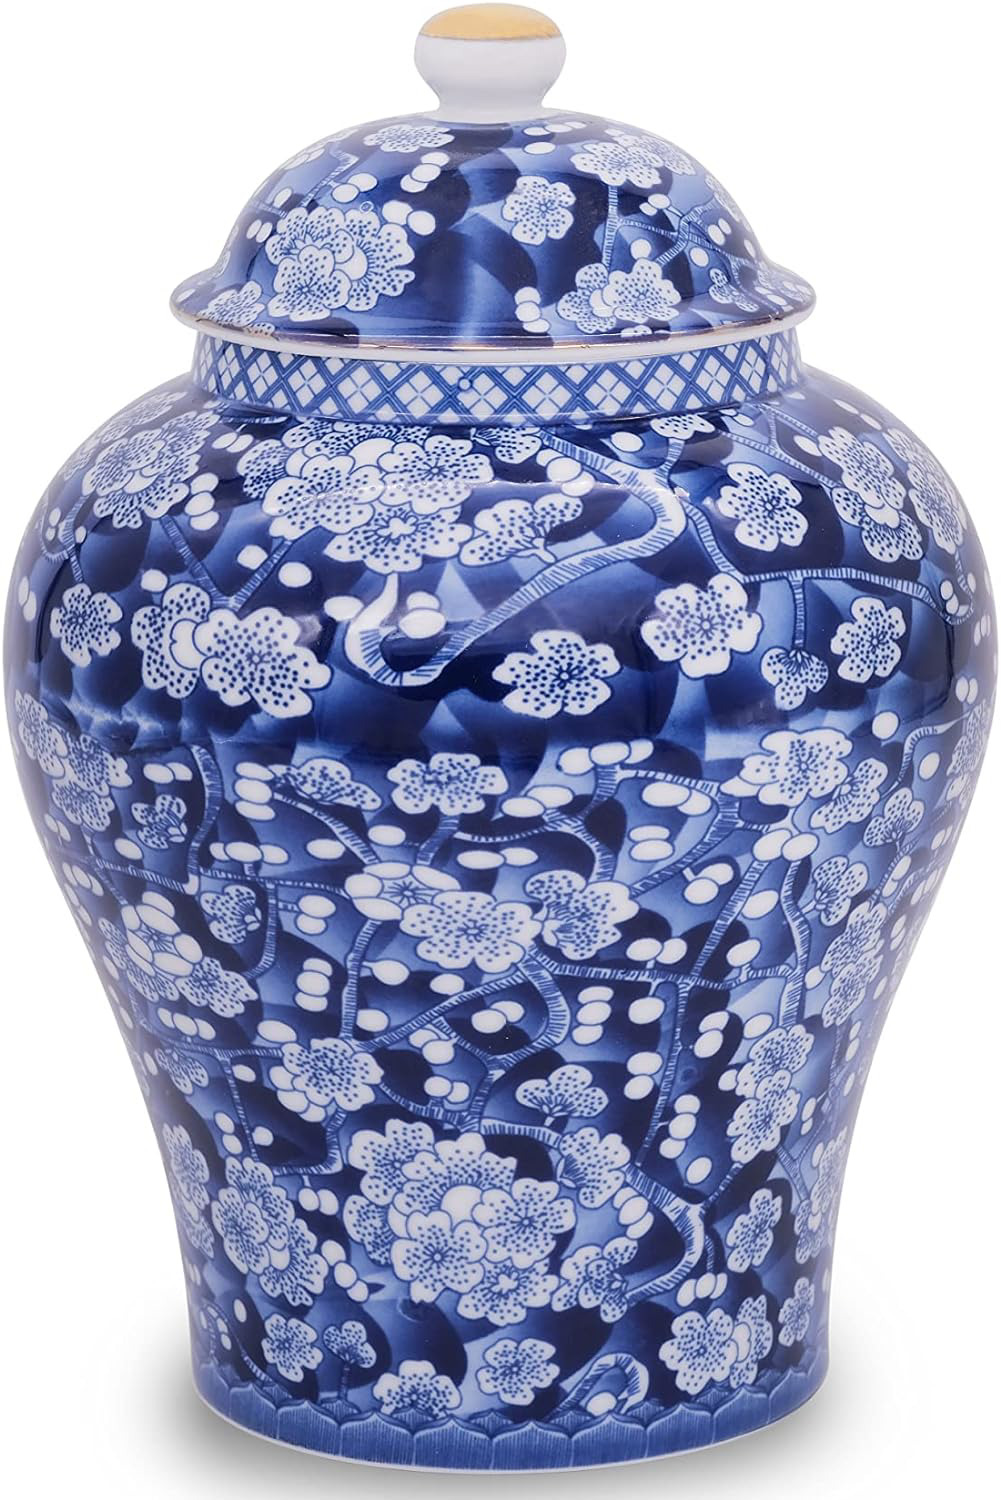 BALIOS Ginger Jar with Lid Mandarin Blue and White Porcelain Plum Blossom, Decor